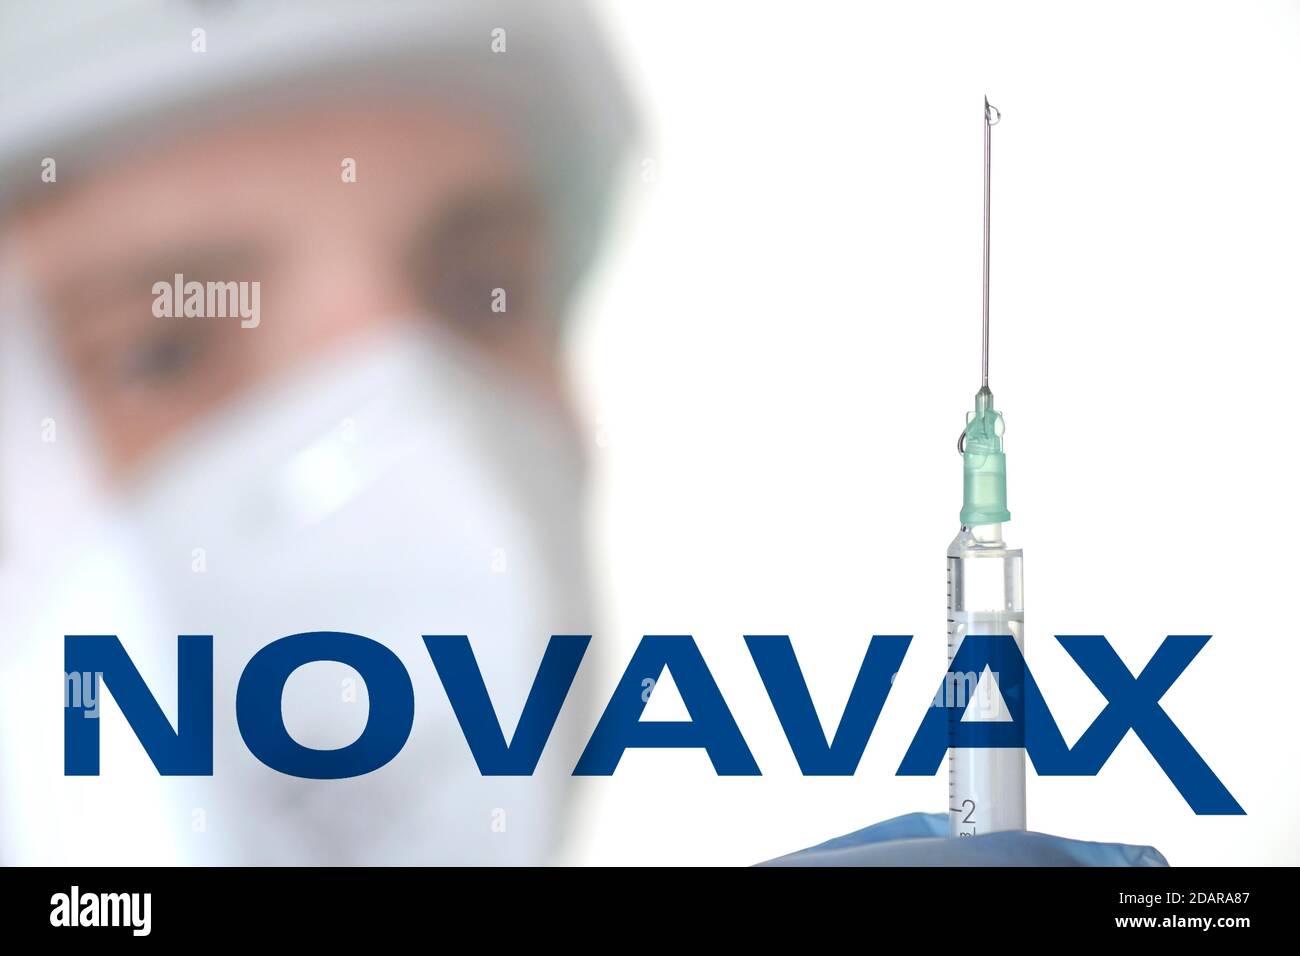 Image symbole vaccin Corona de NOVAVAX, homme avec seringue, crise corona, Bade-Wurtemberg, Allemagne Banque D'Images